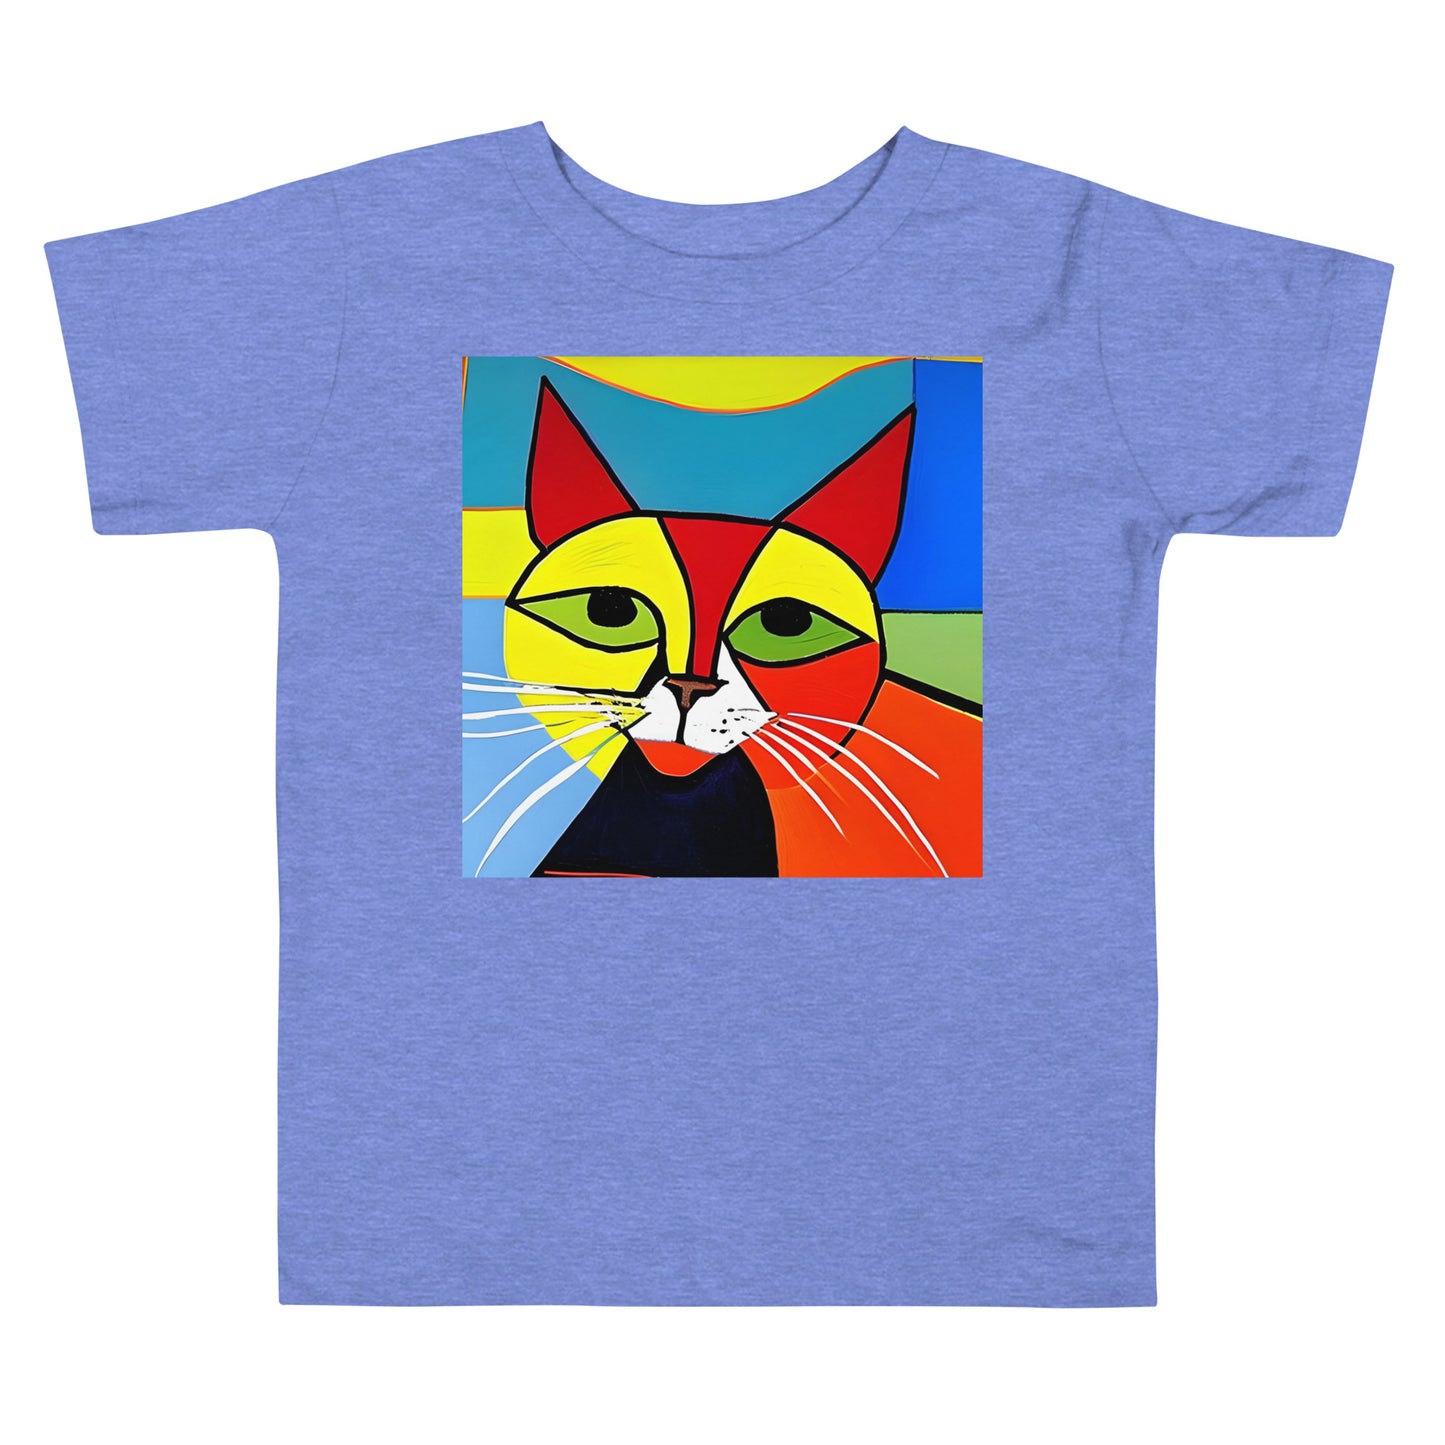 Purrfect Toddler's T-Shirt - 010